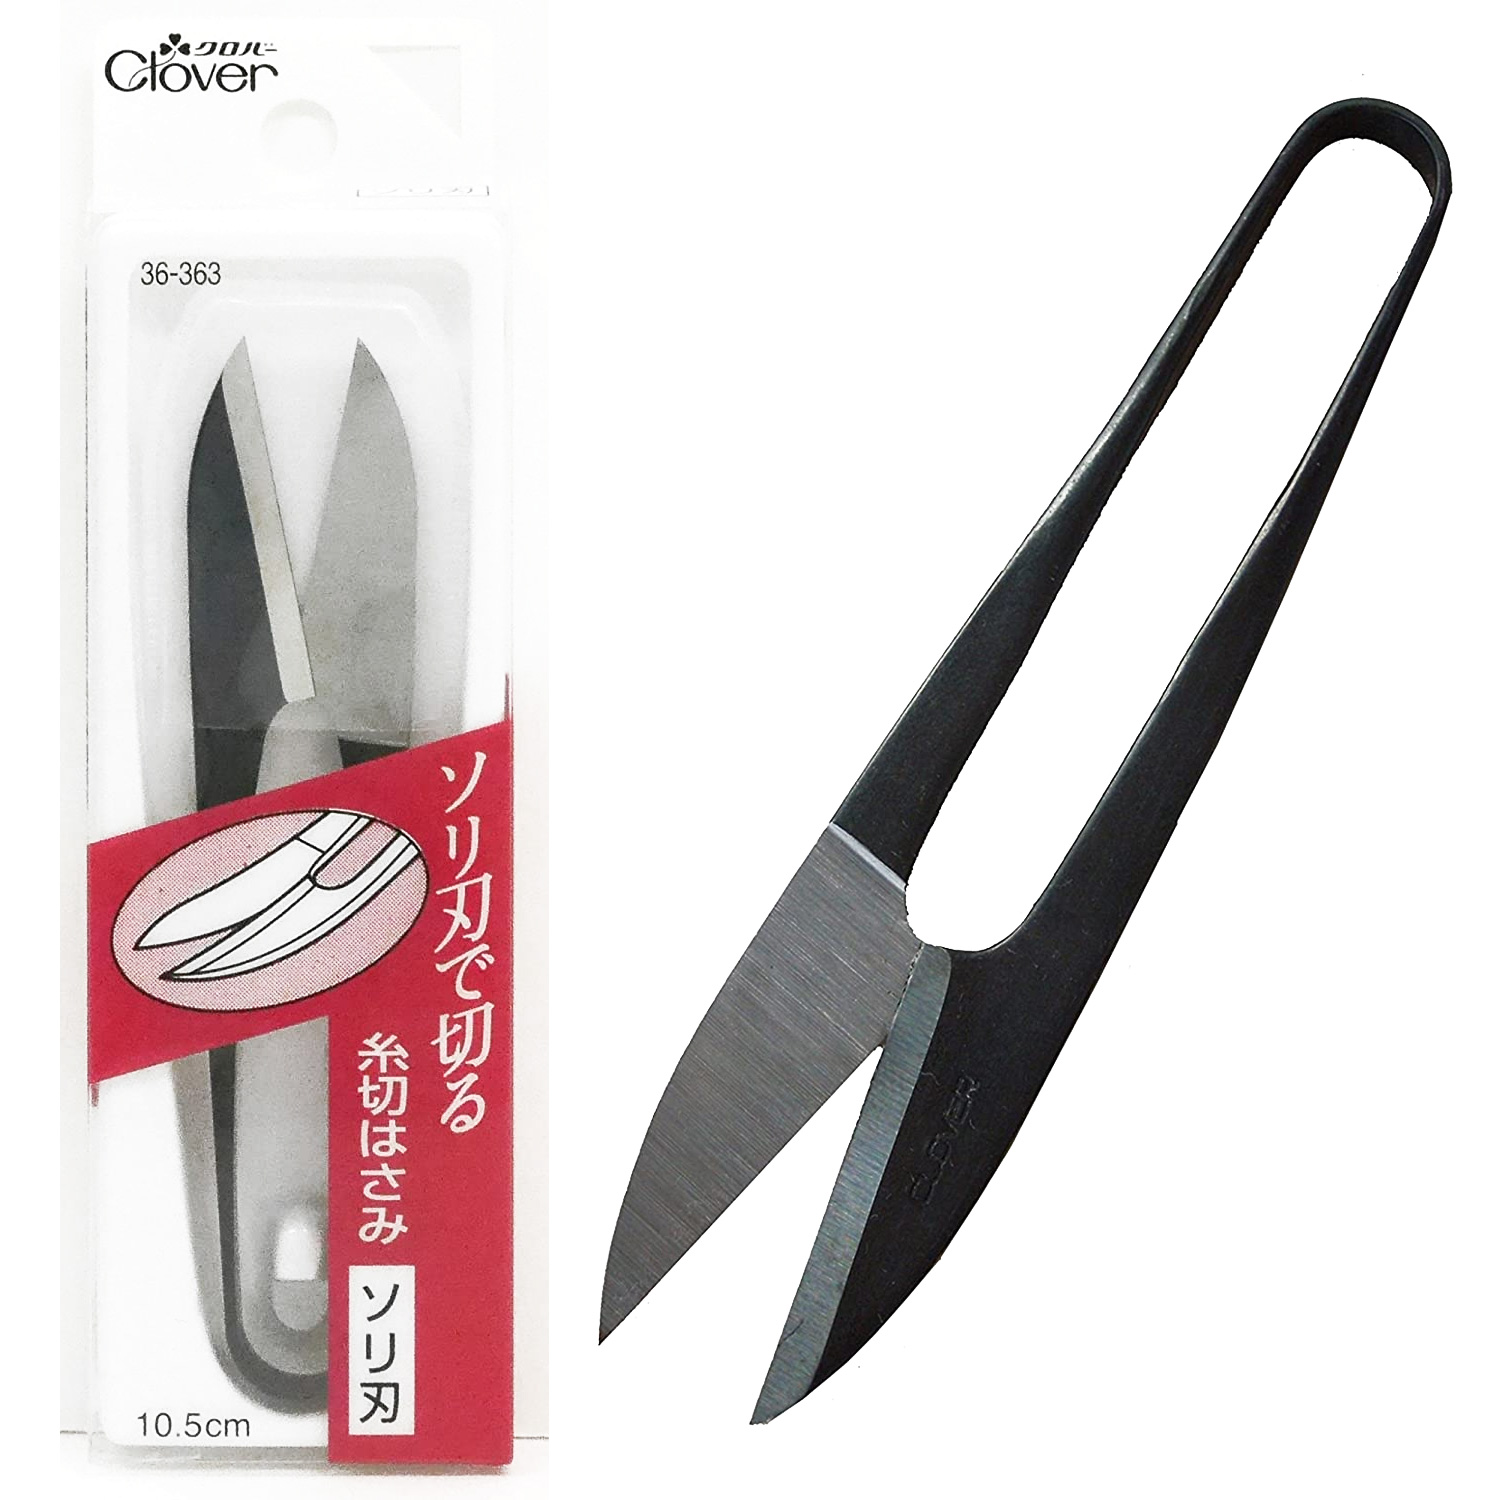 CL36-363 Clover H-Thread Scissors Sled Blade 10.5cm (pcs)